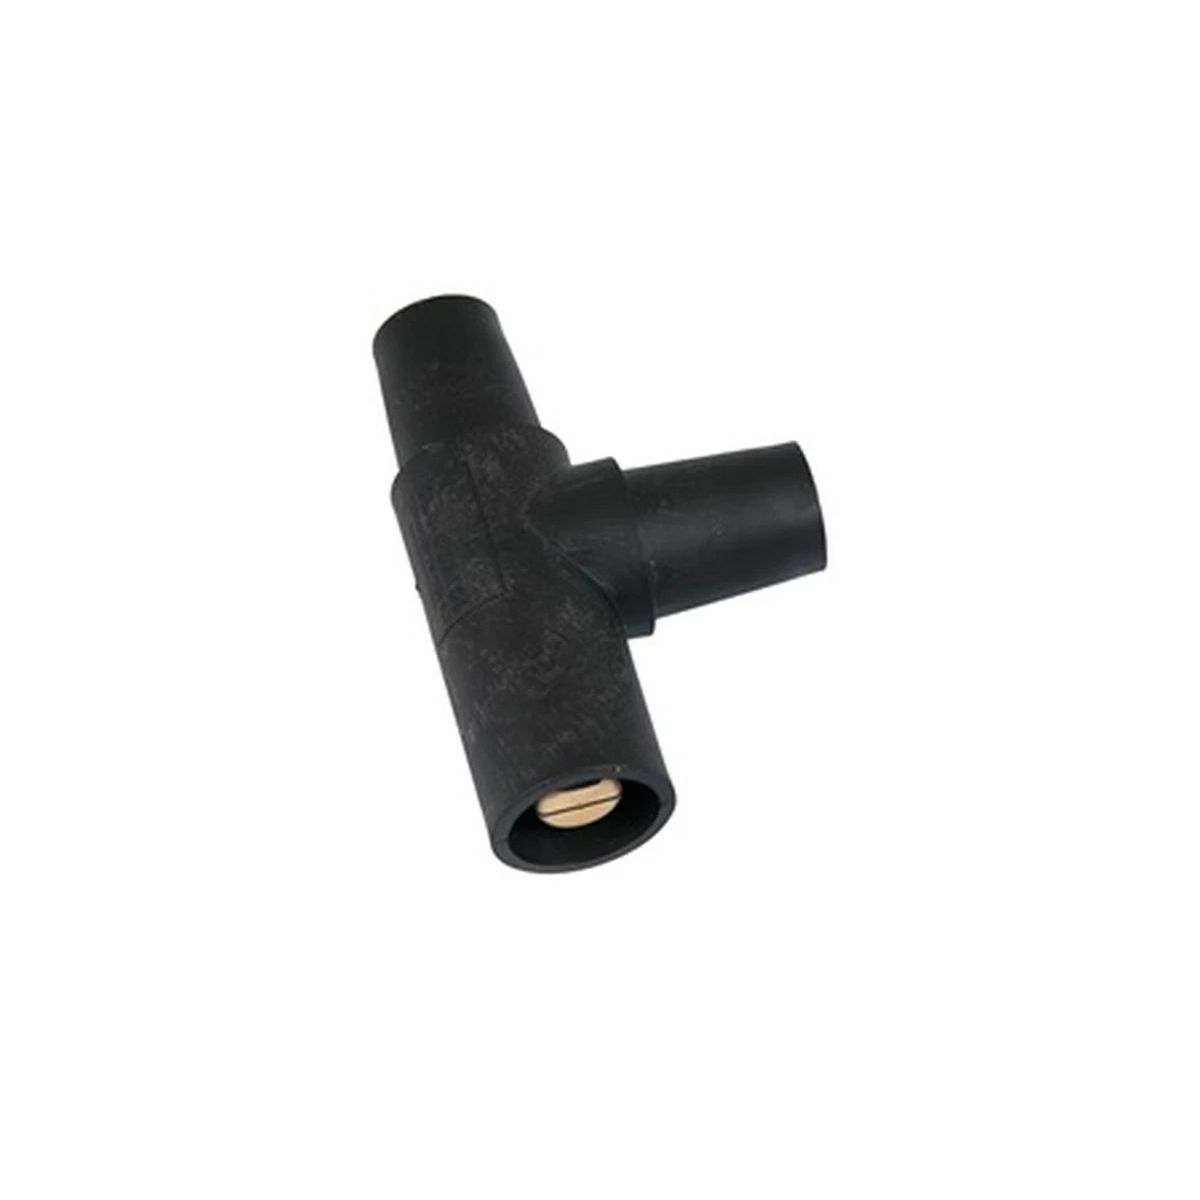 NEW Digiflex Cam-Lok Connector Tapping Tee (TT) Adapter - Black